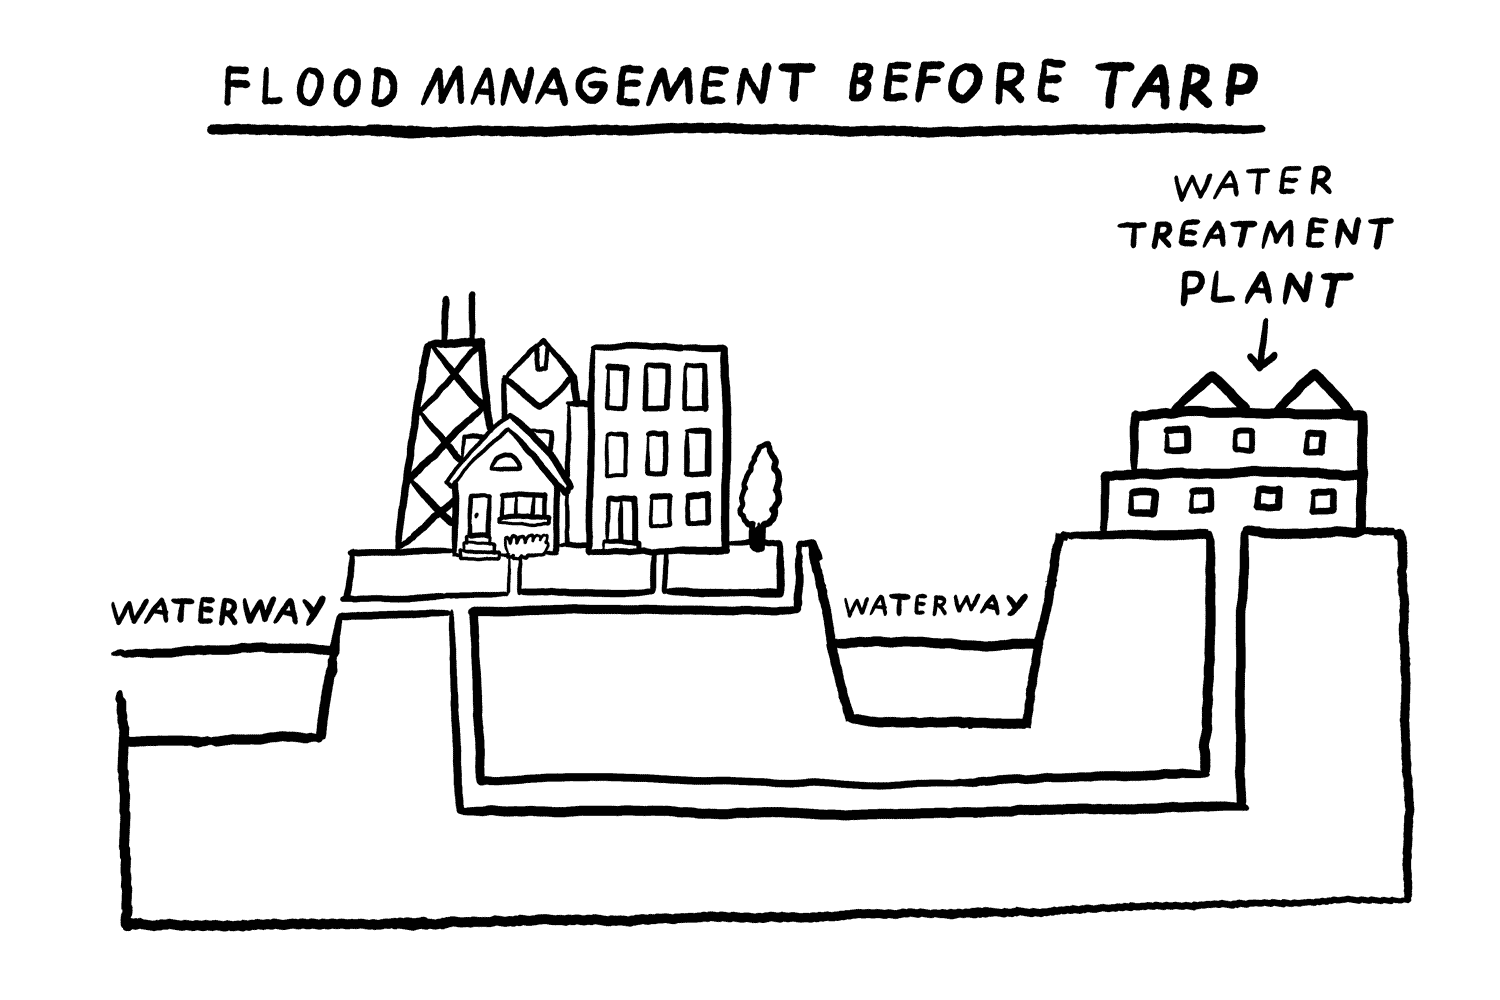 Flood management before TARP